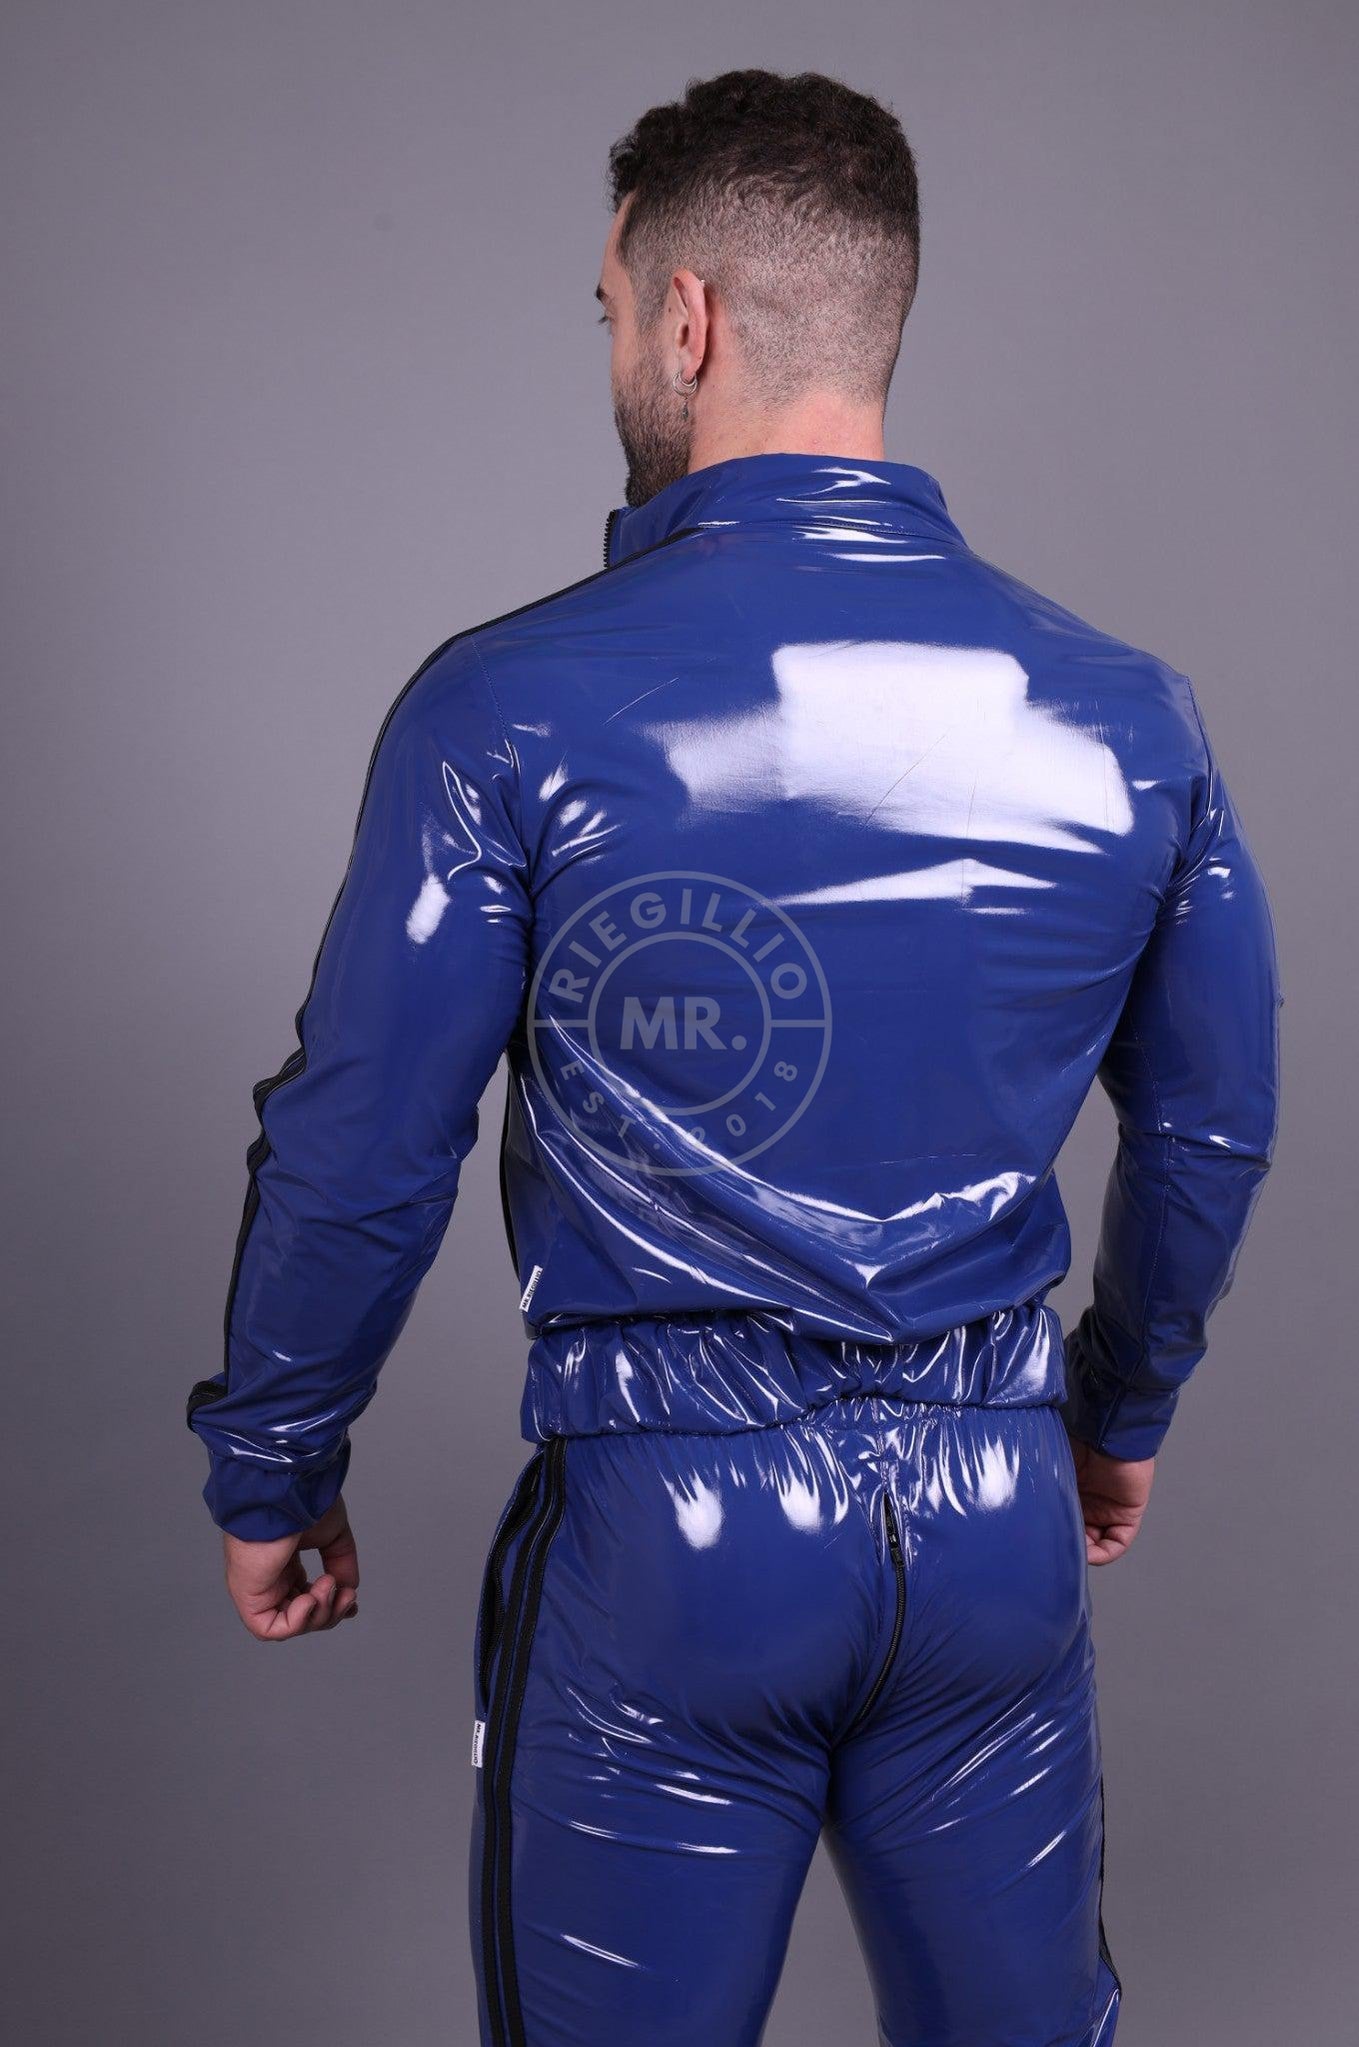 Blue PVC Tracksuit Jacket - Black Stripes at MR. Riegillio